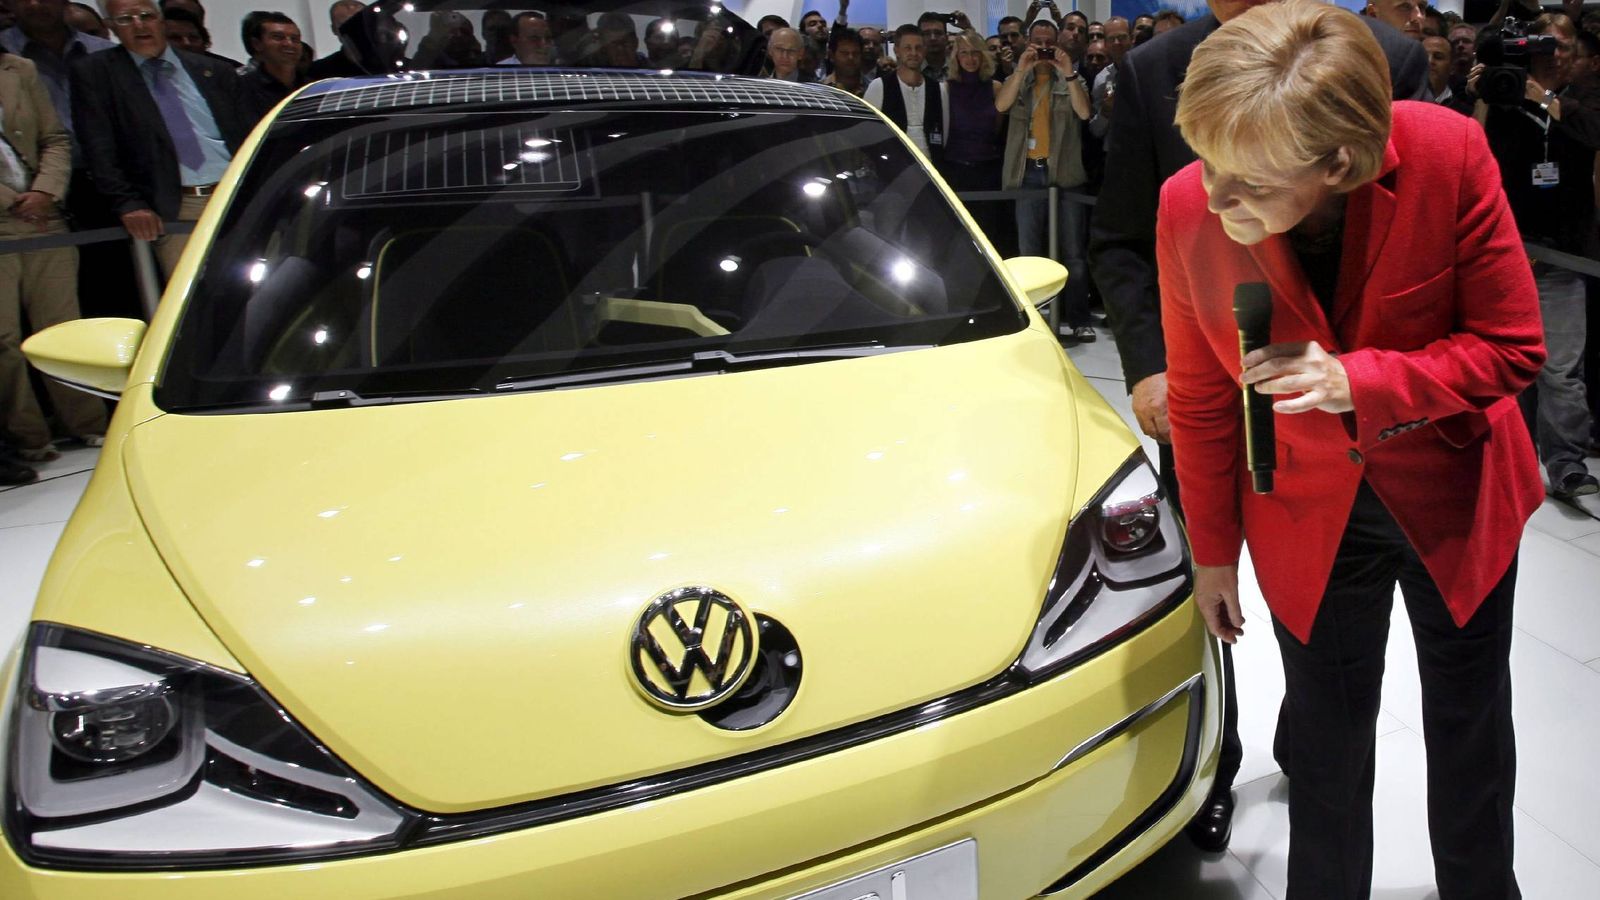 Foto: La canciller Angela Merkel observa un Volkswagen, en una imagen de archivo (EFE)